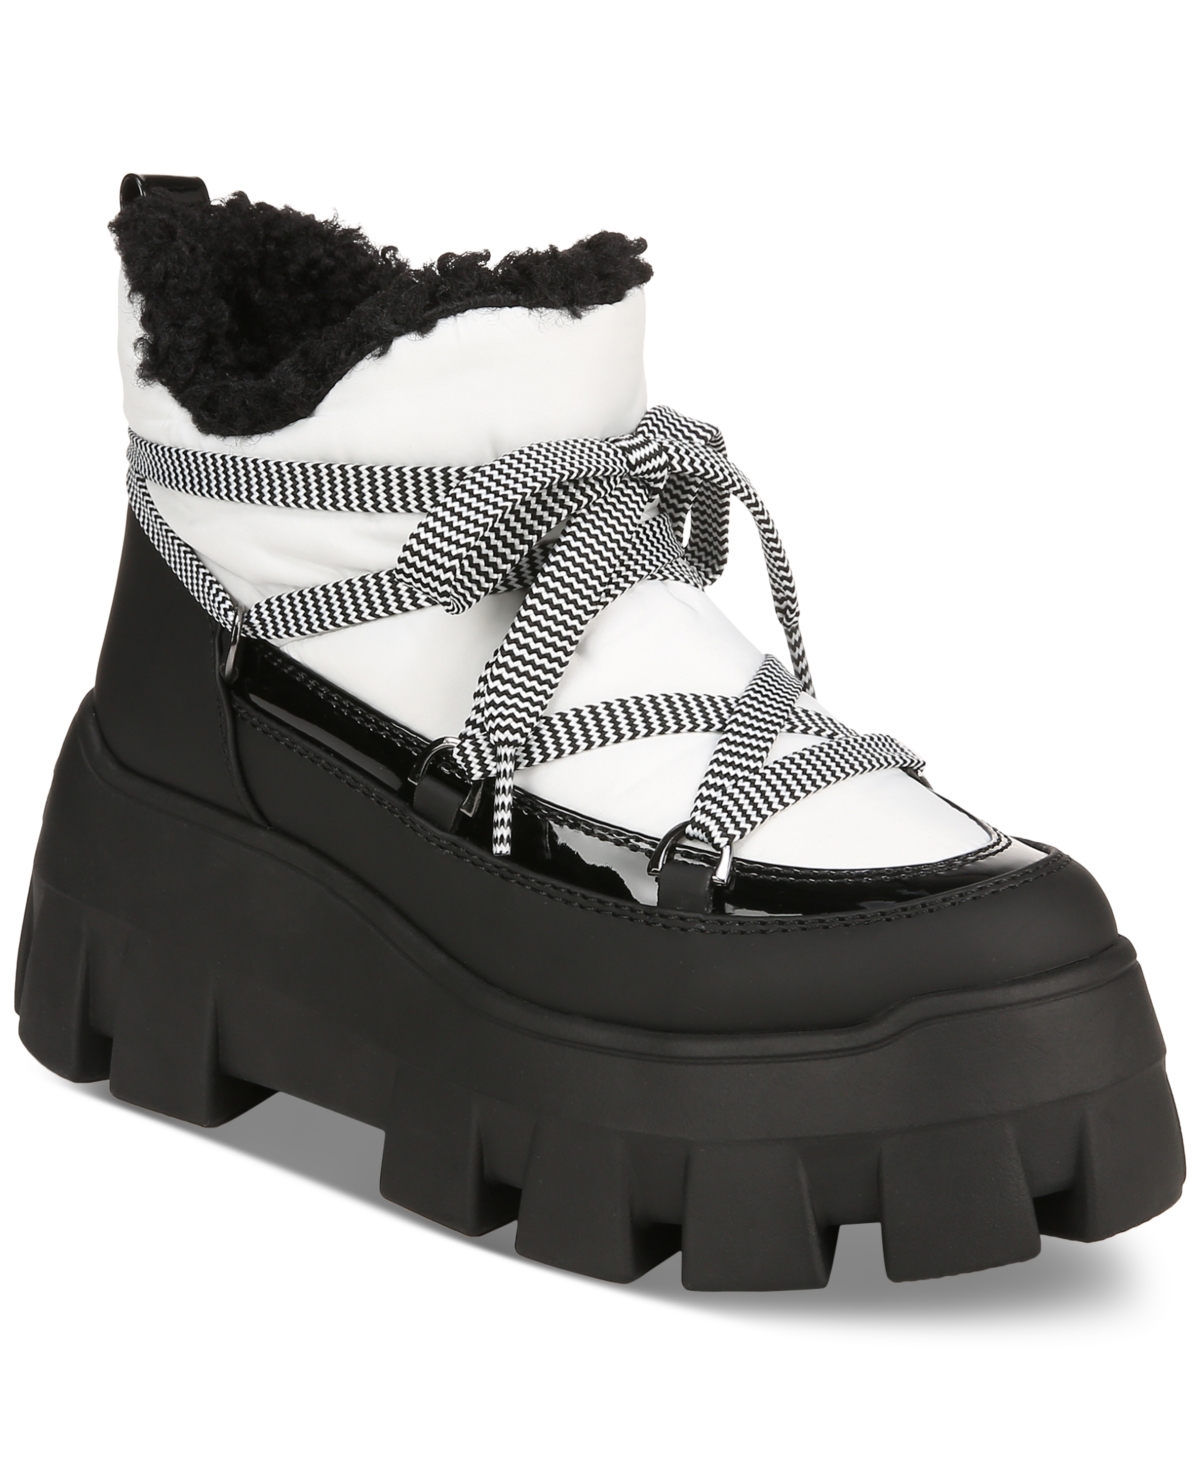 Women's Ali Lace-Up Lug Platform Moon Boots - Bright White/Black